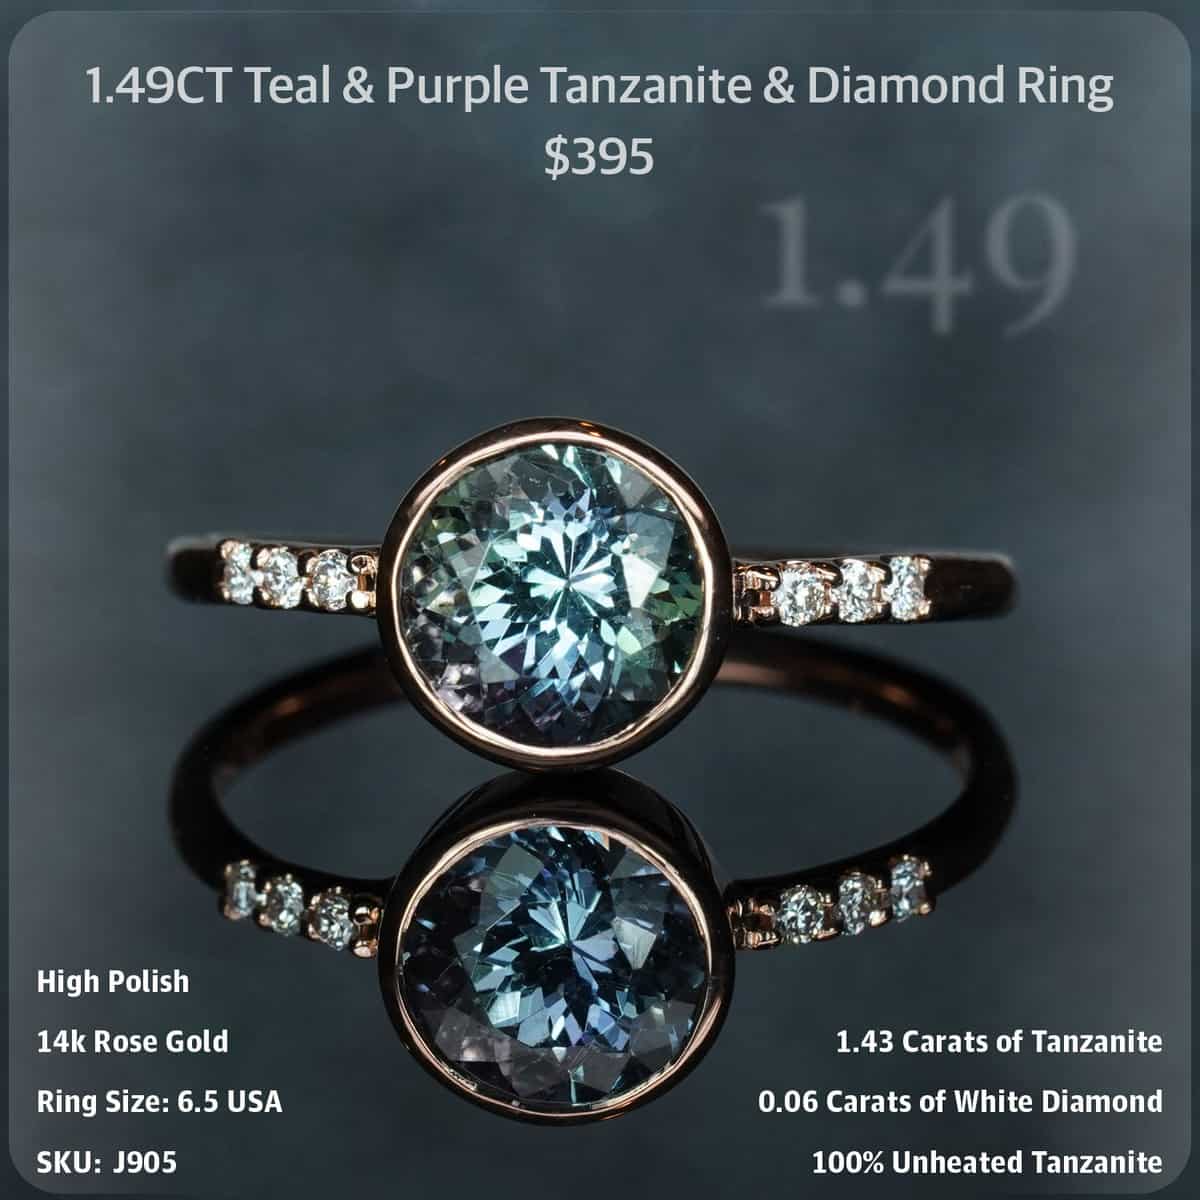 1.49CT Teal & Purple Tanzanite & Diamond Ring